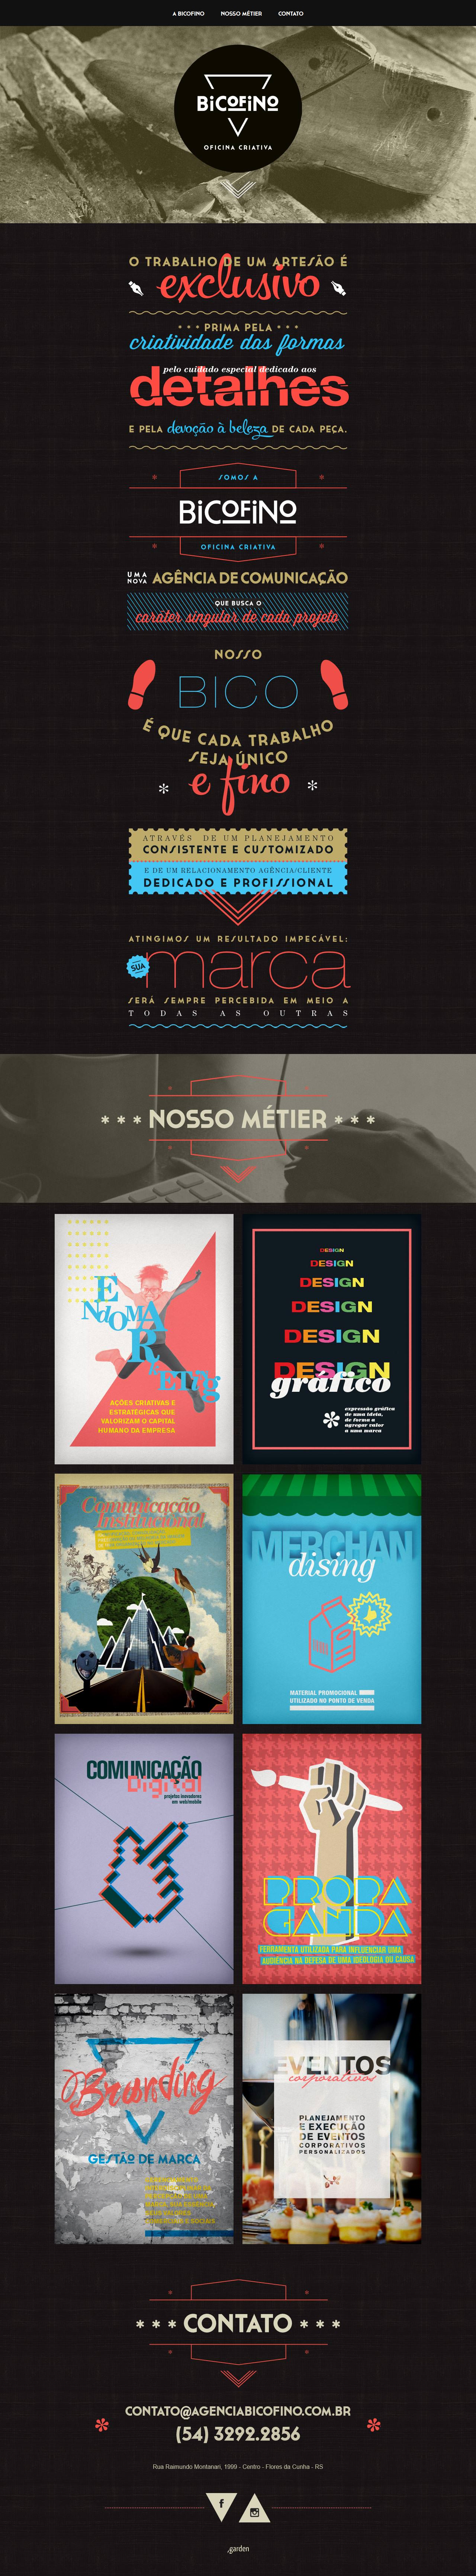 Bicofino – Oficina Criativa Website Screenshot